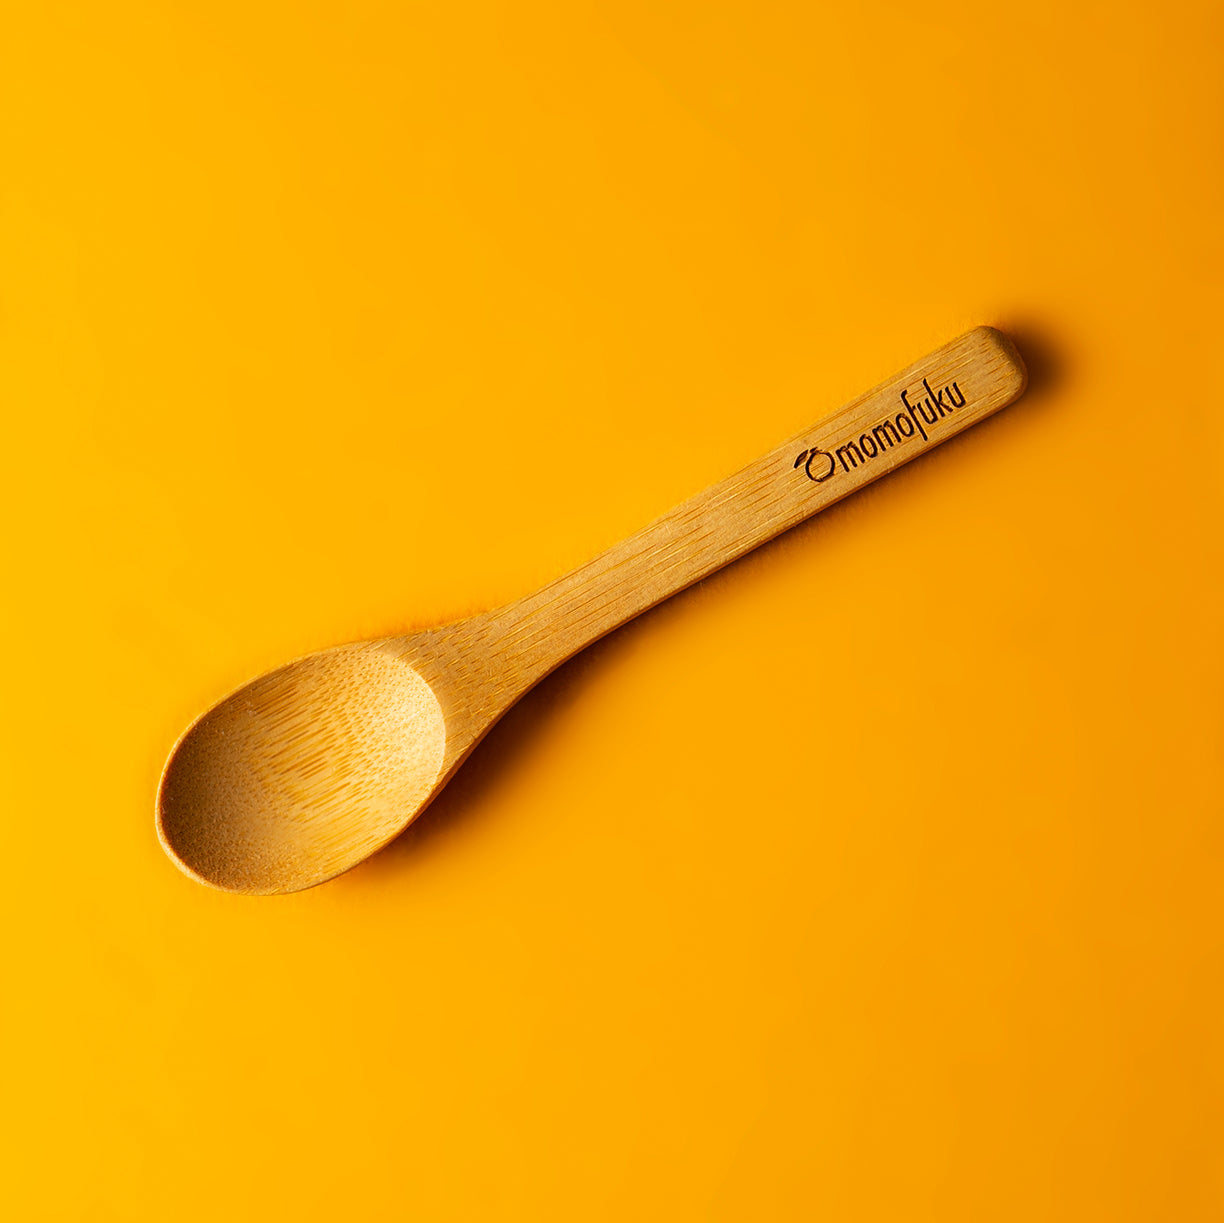 chili crunch spoon